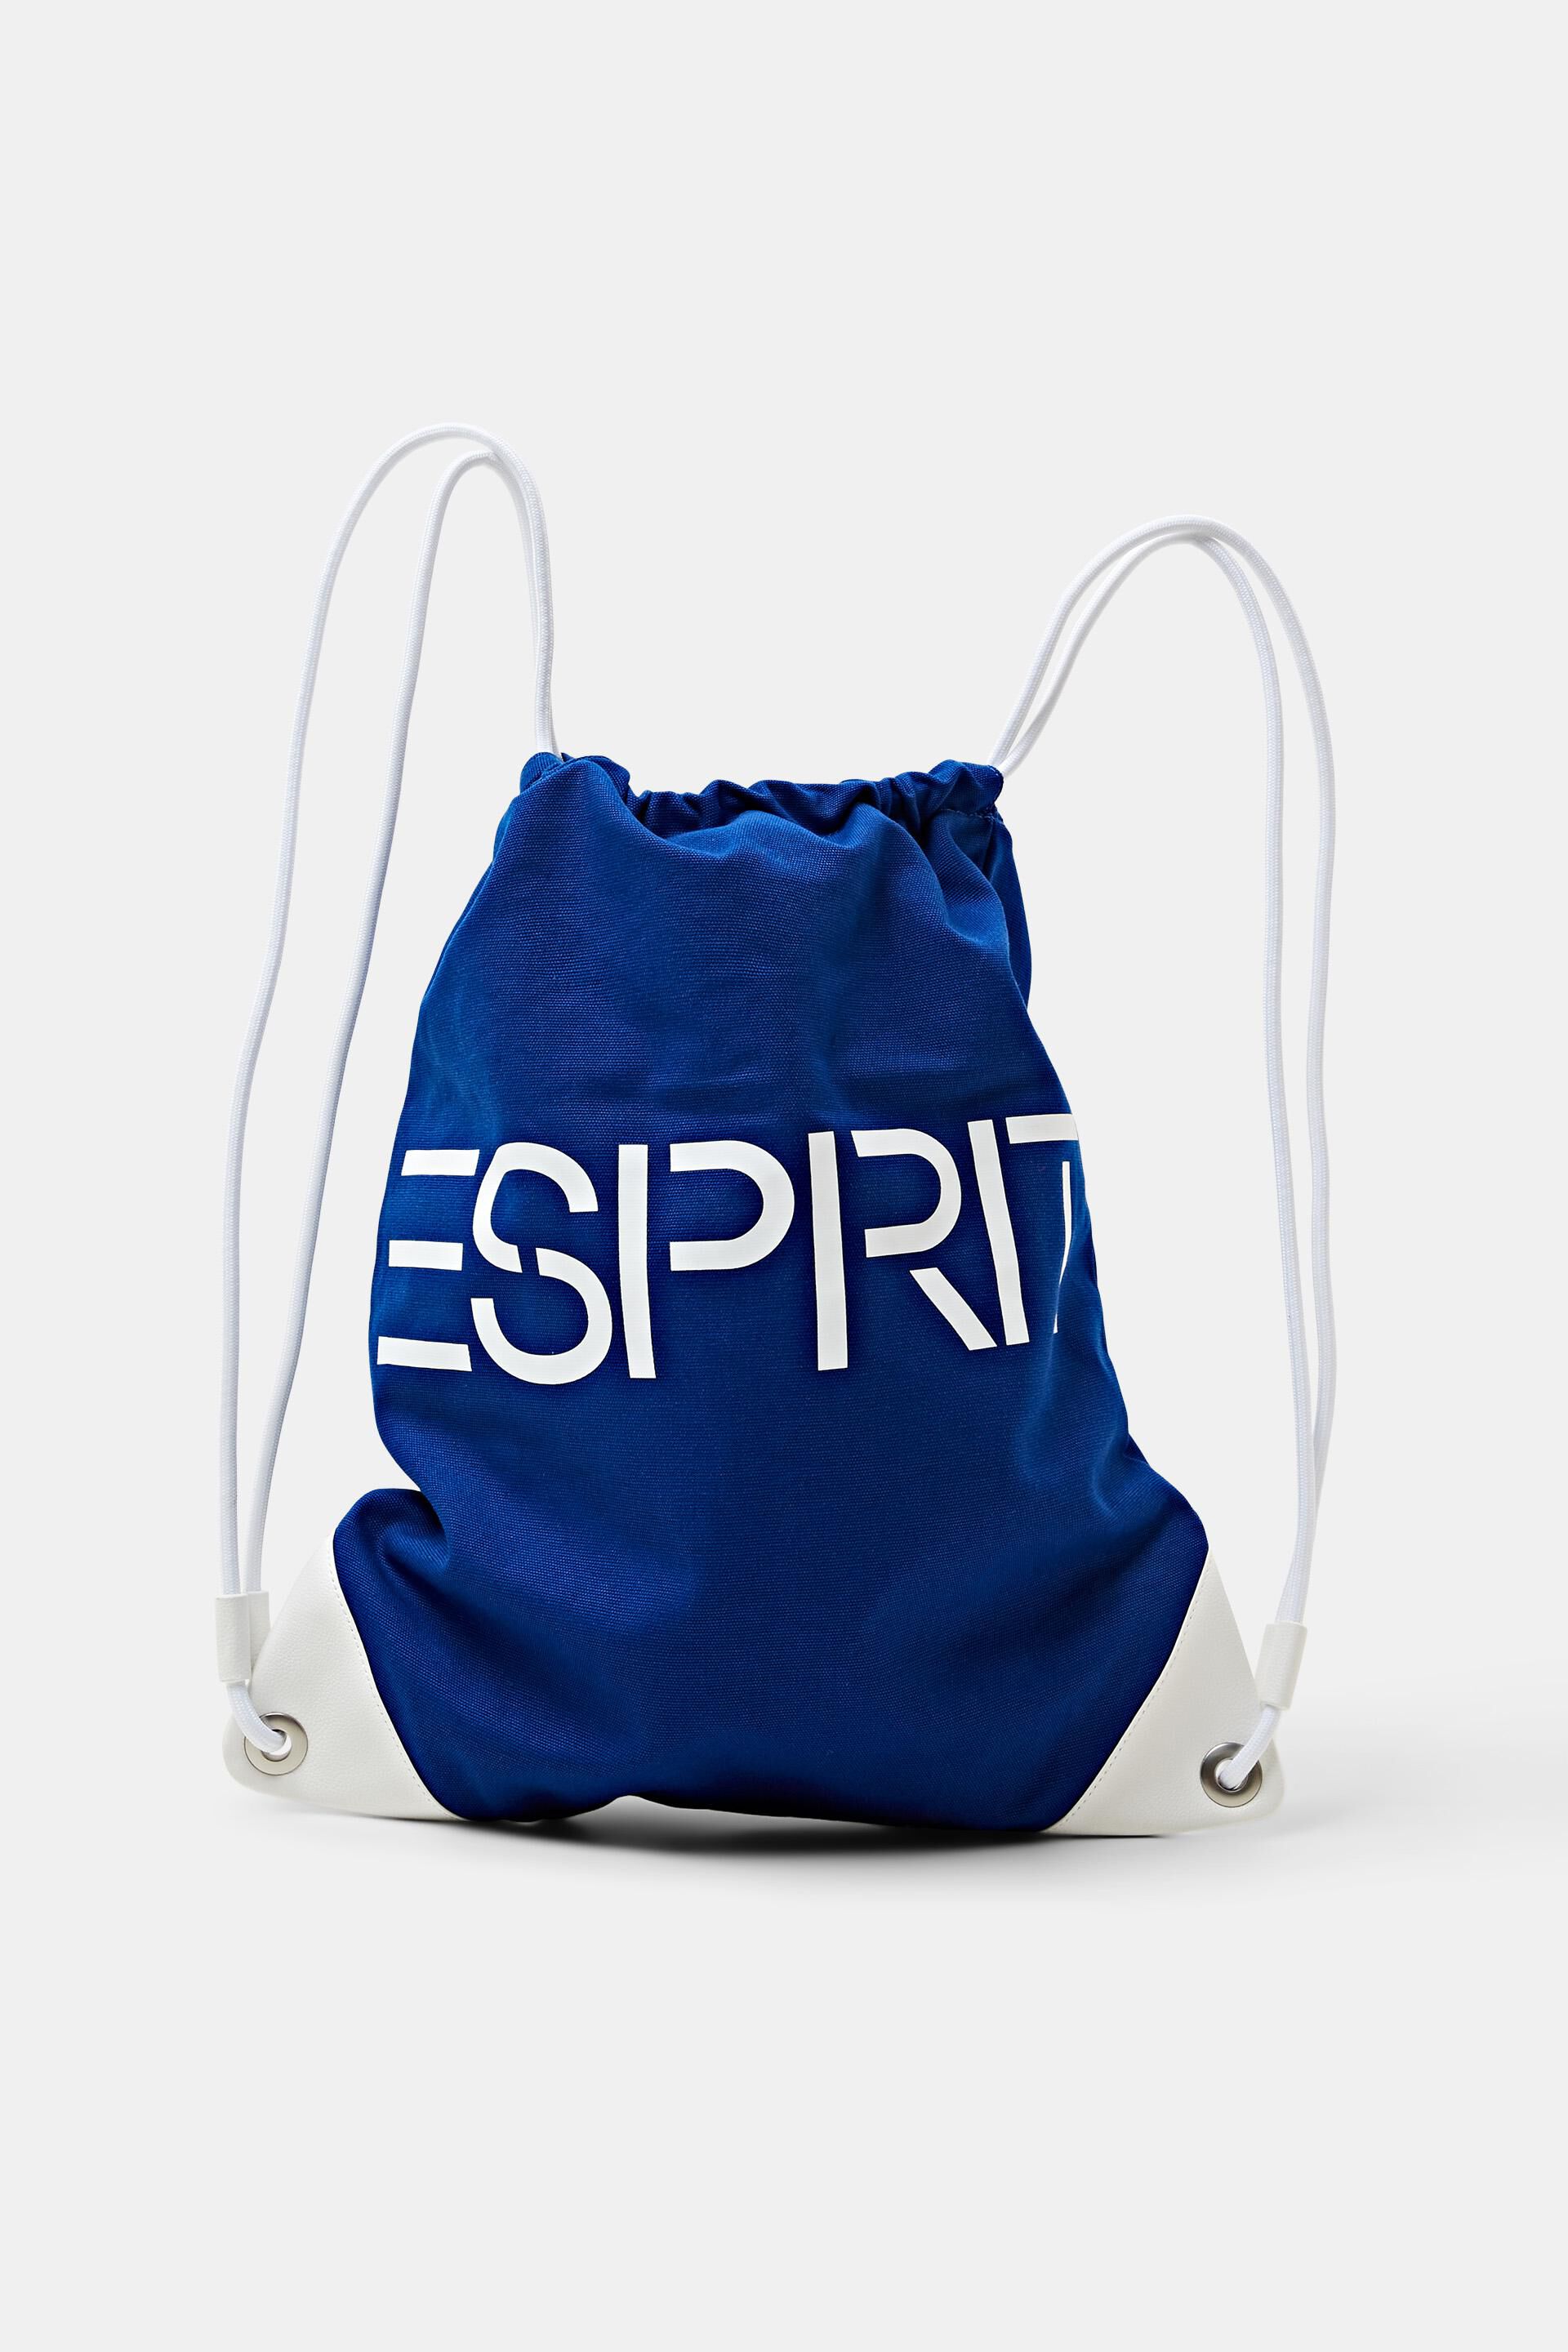 Esprit Canvas Backpack Drawstring Logo Cotton